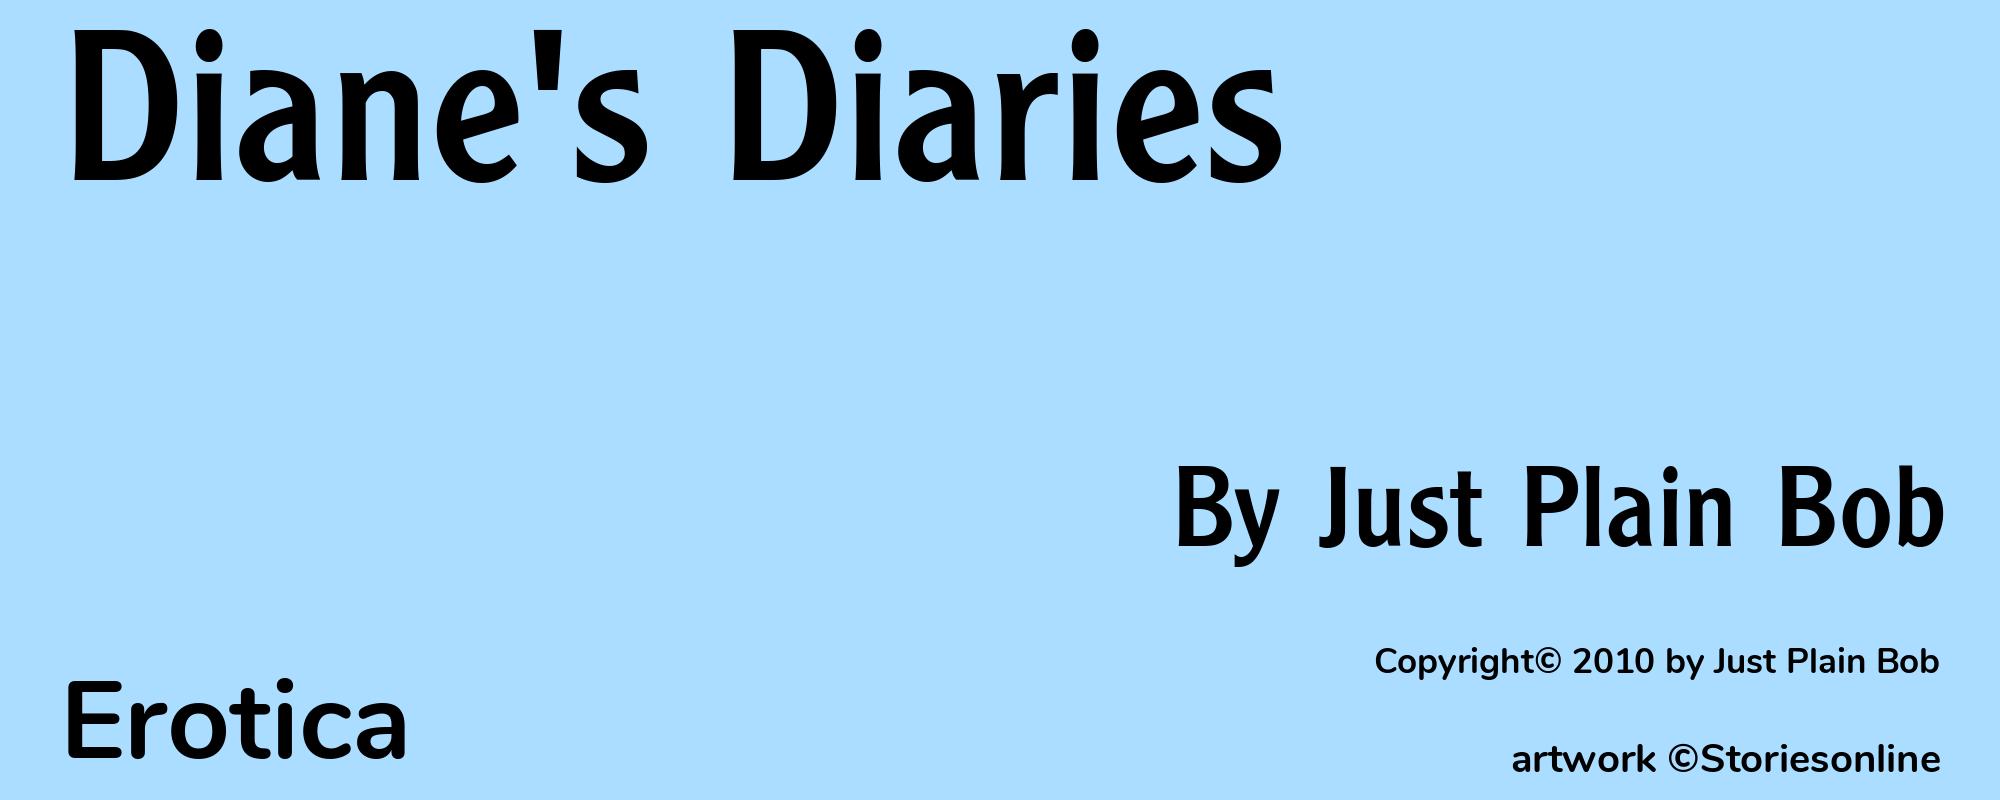 Diane's Diaries - Cover